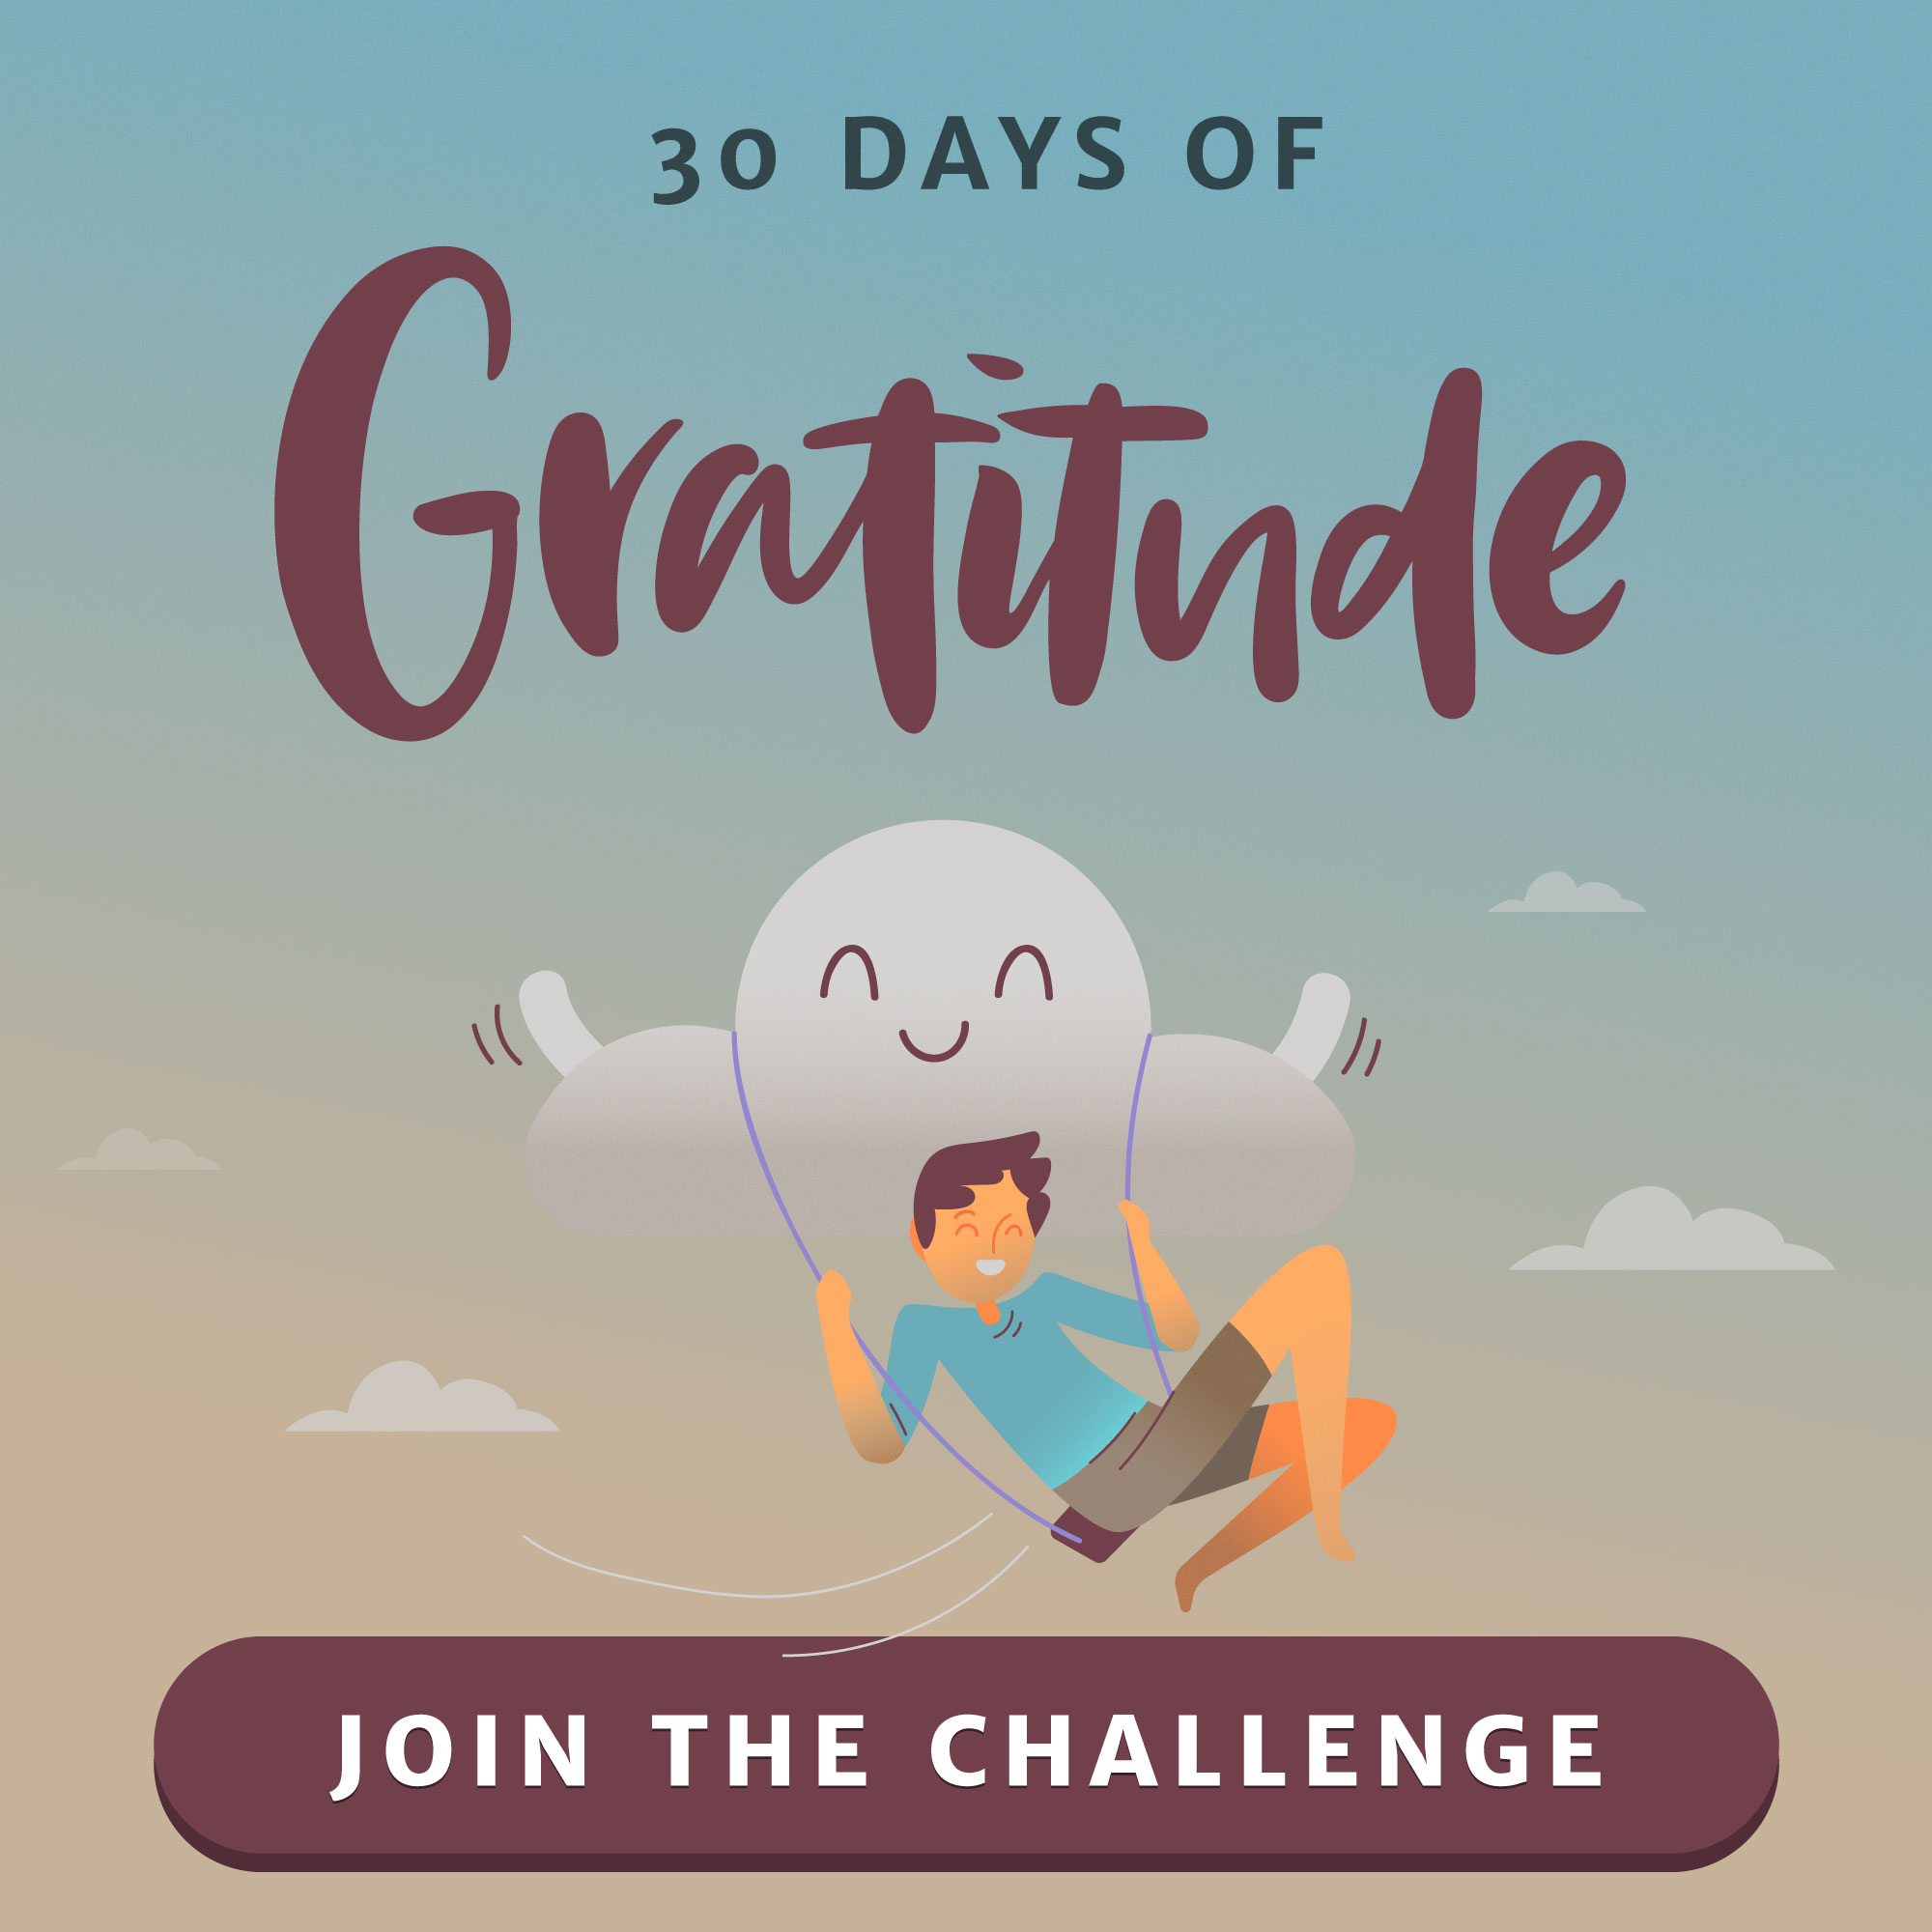 Join 30 Days of Gratitude!